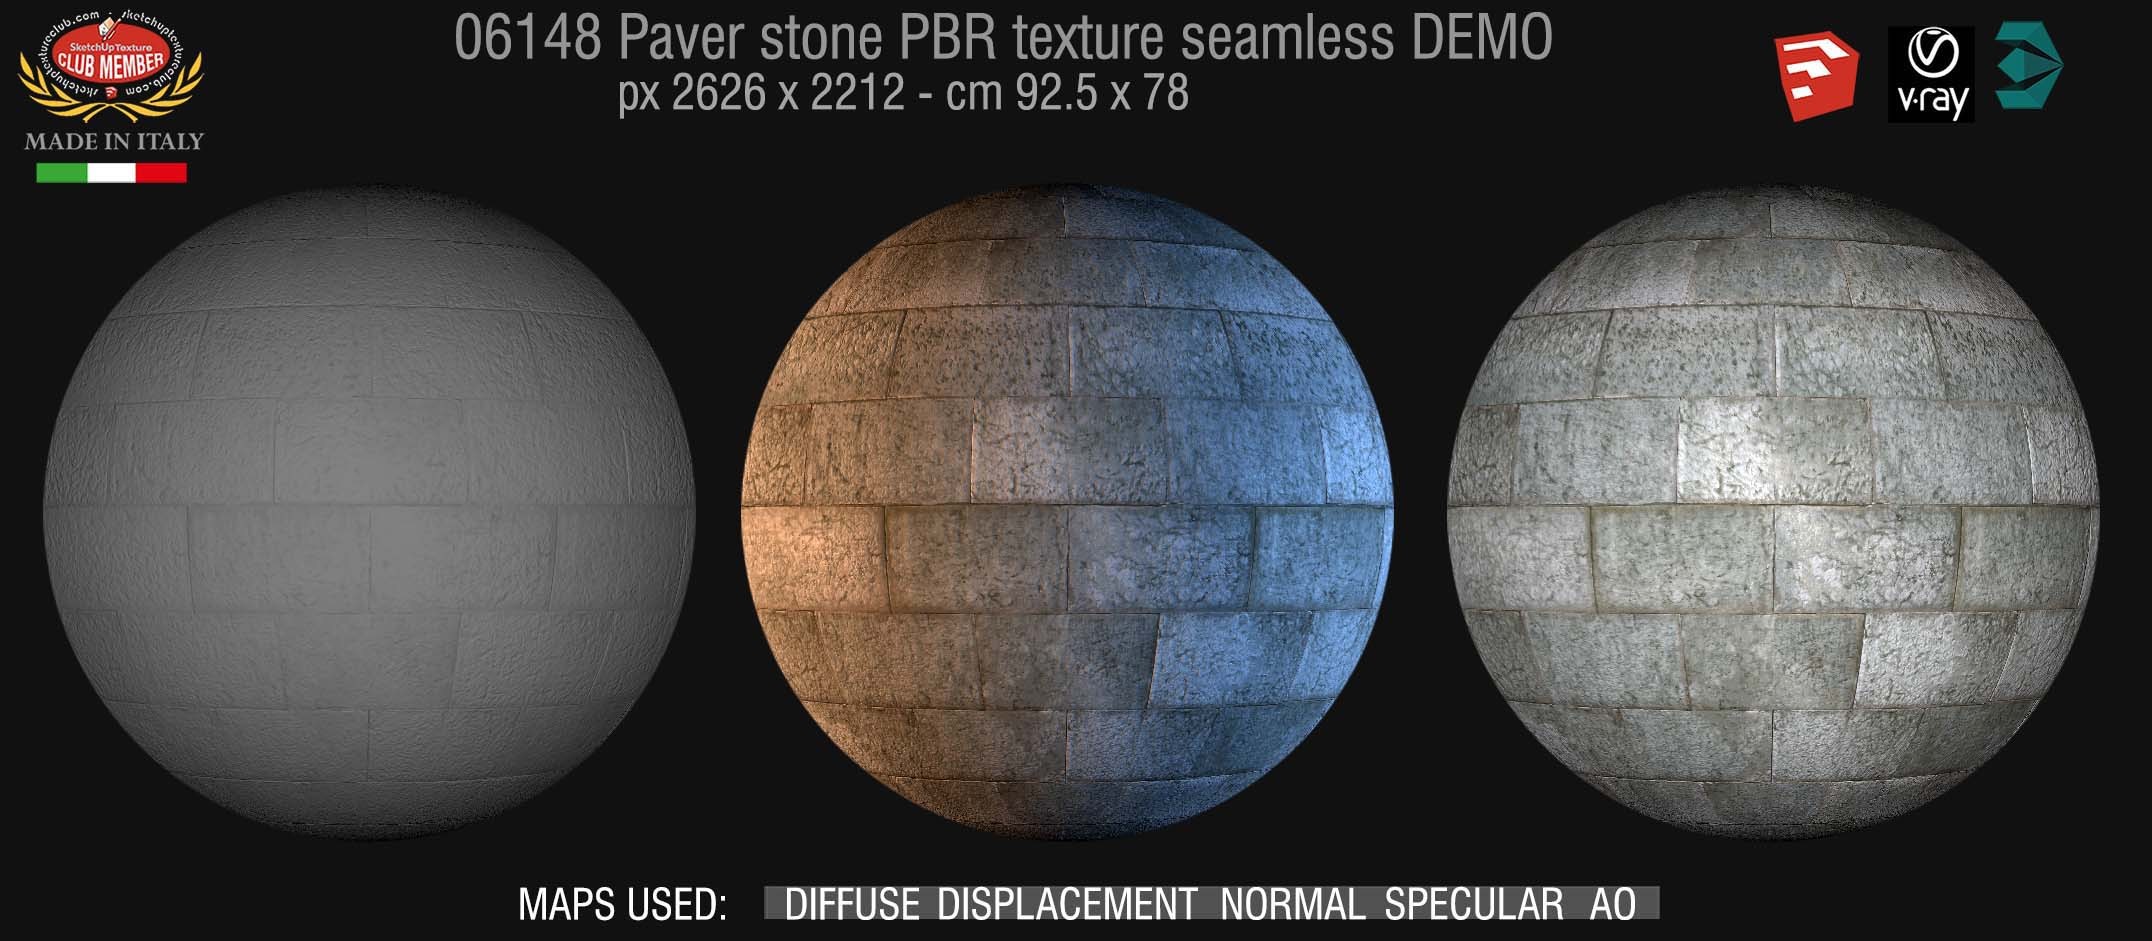 06148 paver stone PBR texture seamless DEMO